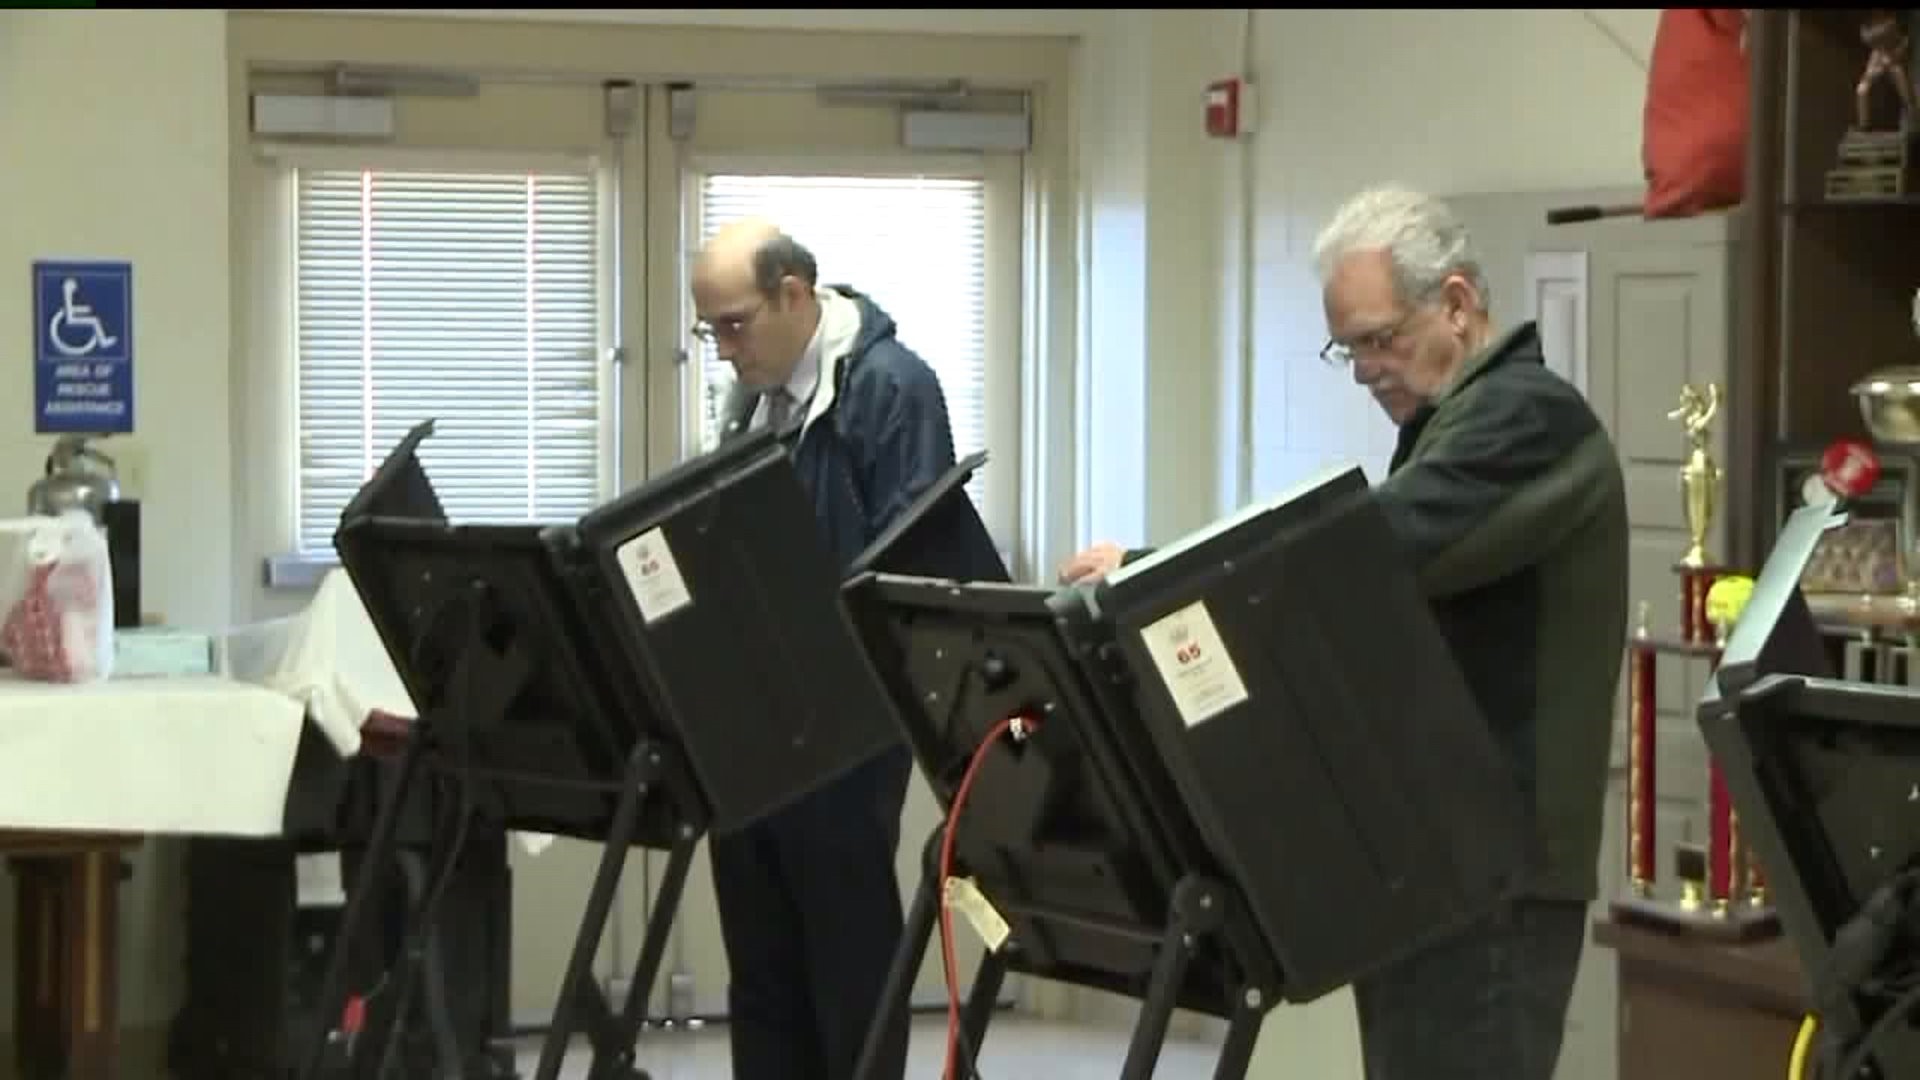 Voting Machine Demonstration Held in Luzerne County